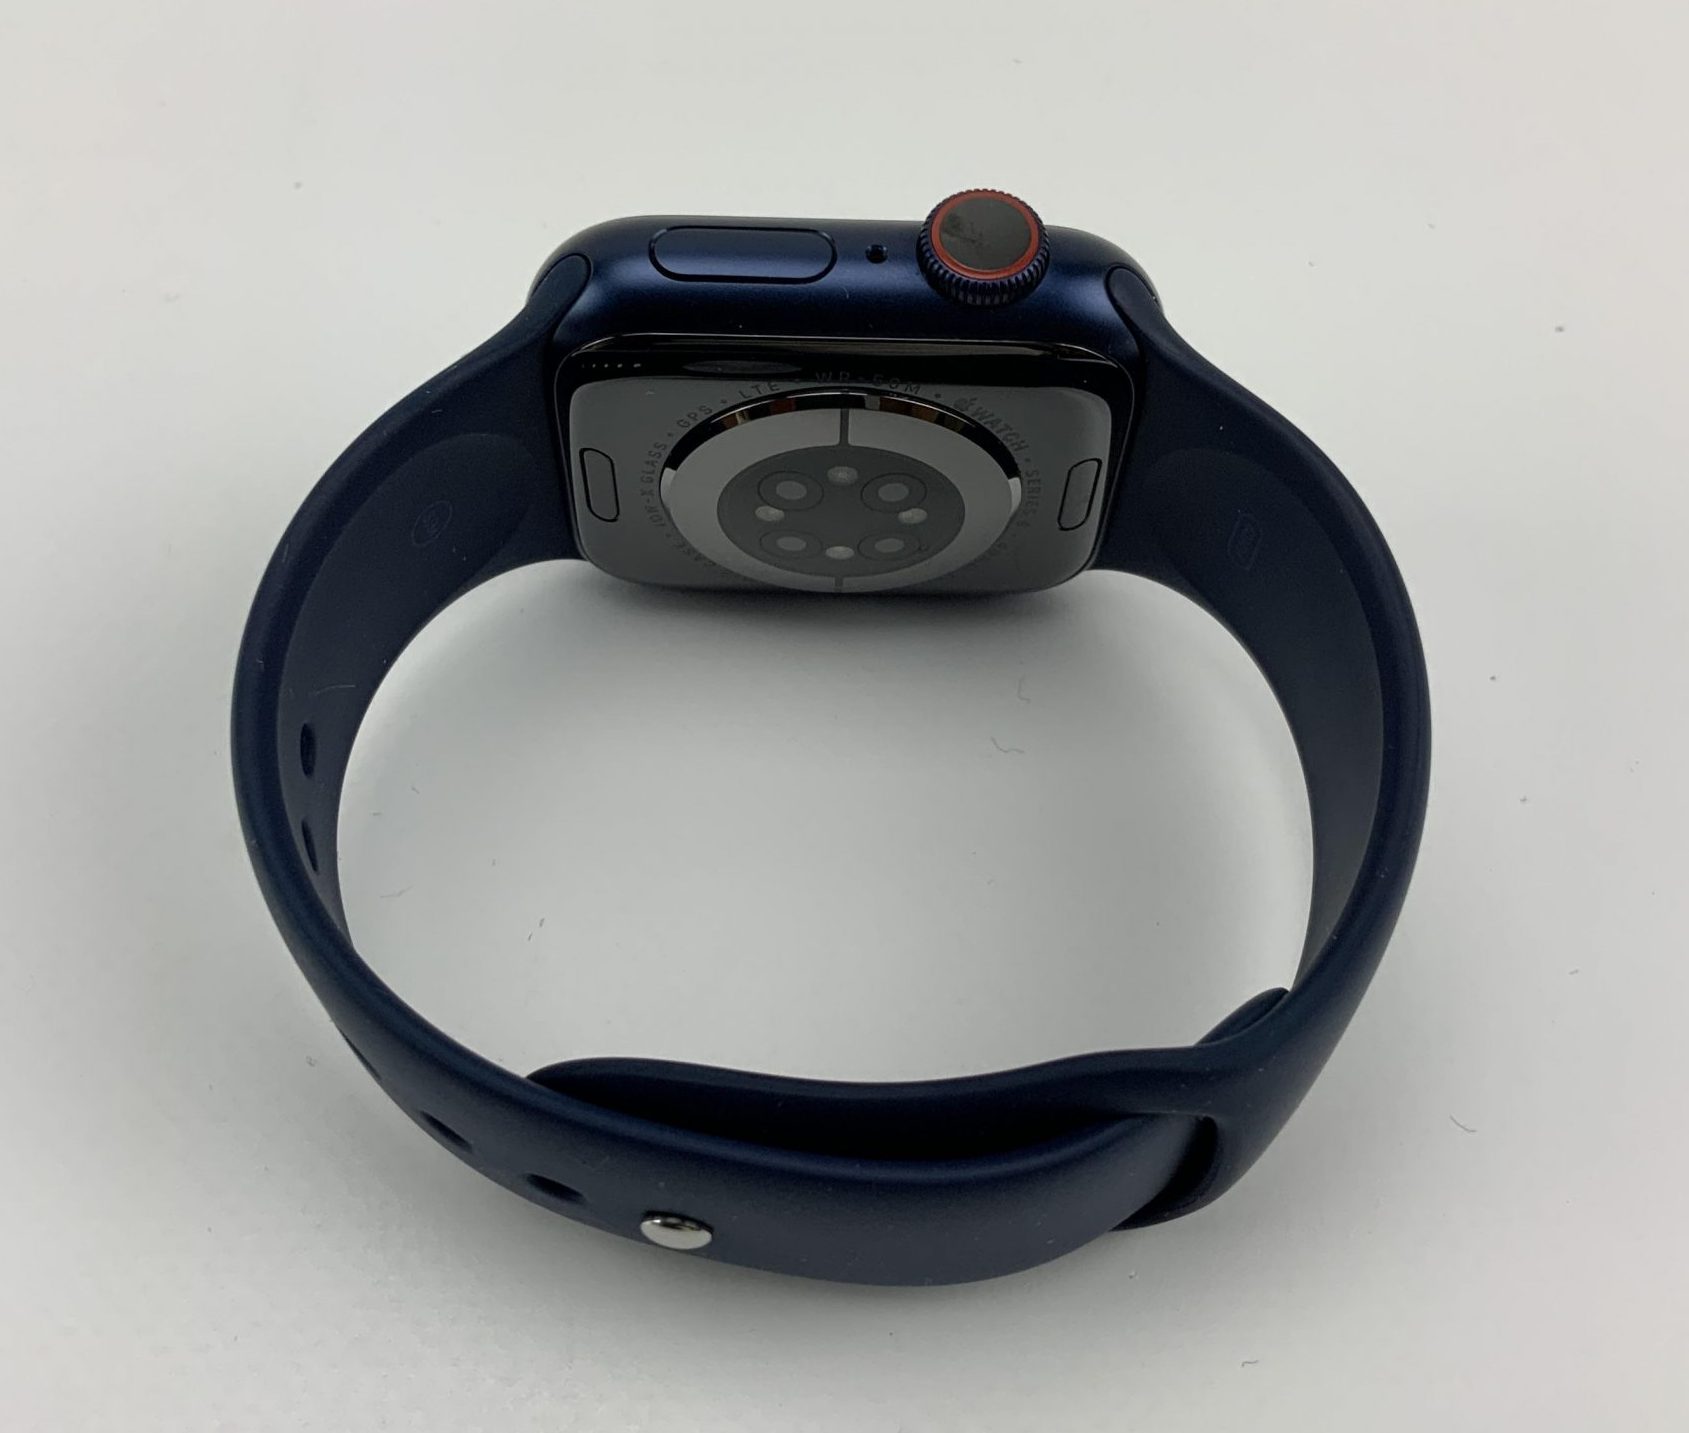 Watch Series 6 Aluminum Cellular (40mm), Blue, image 2